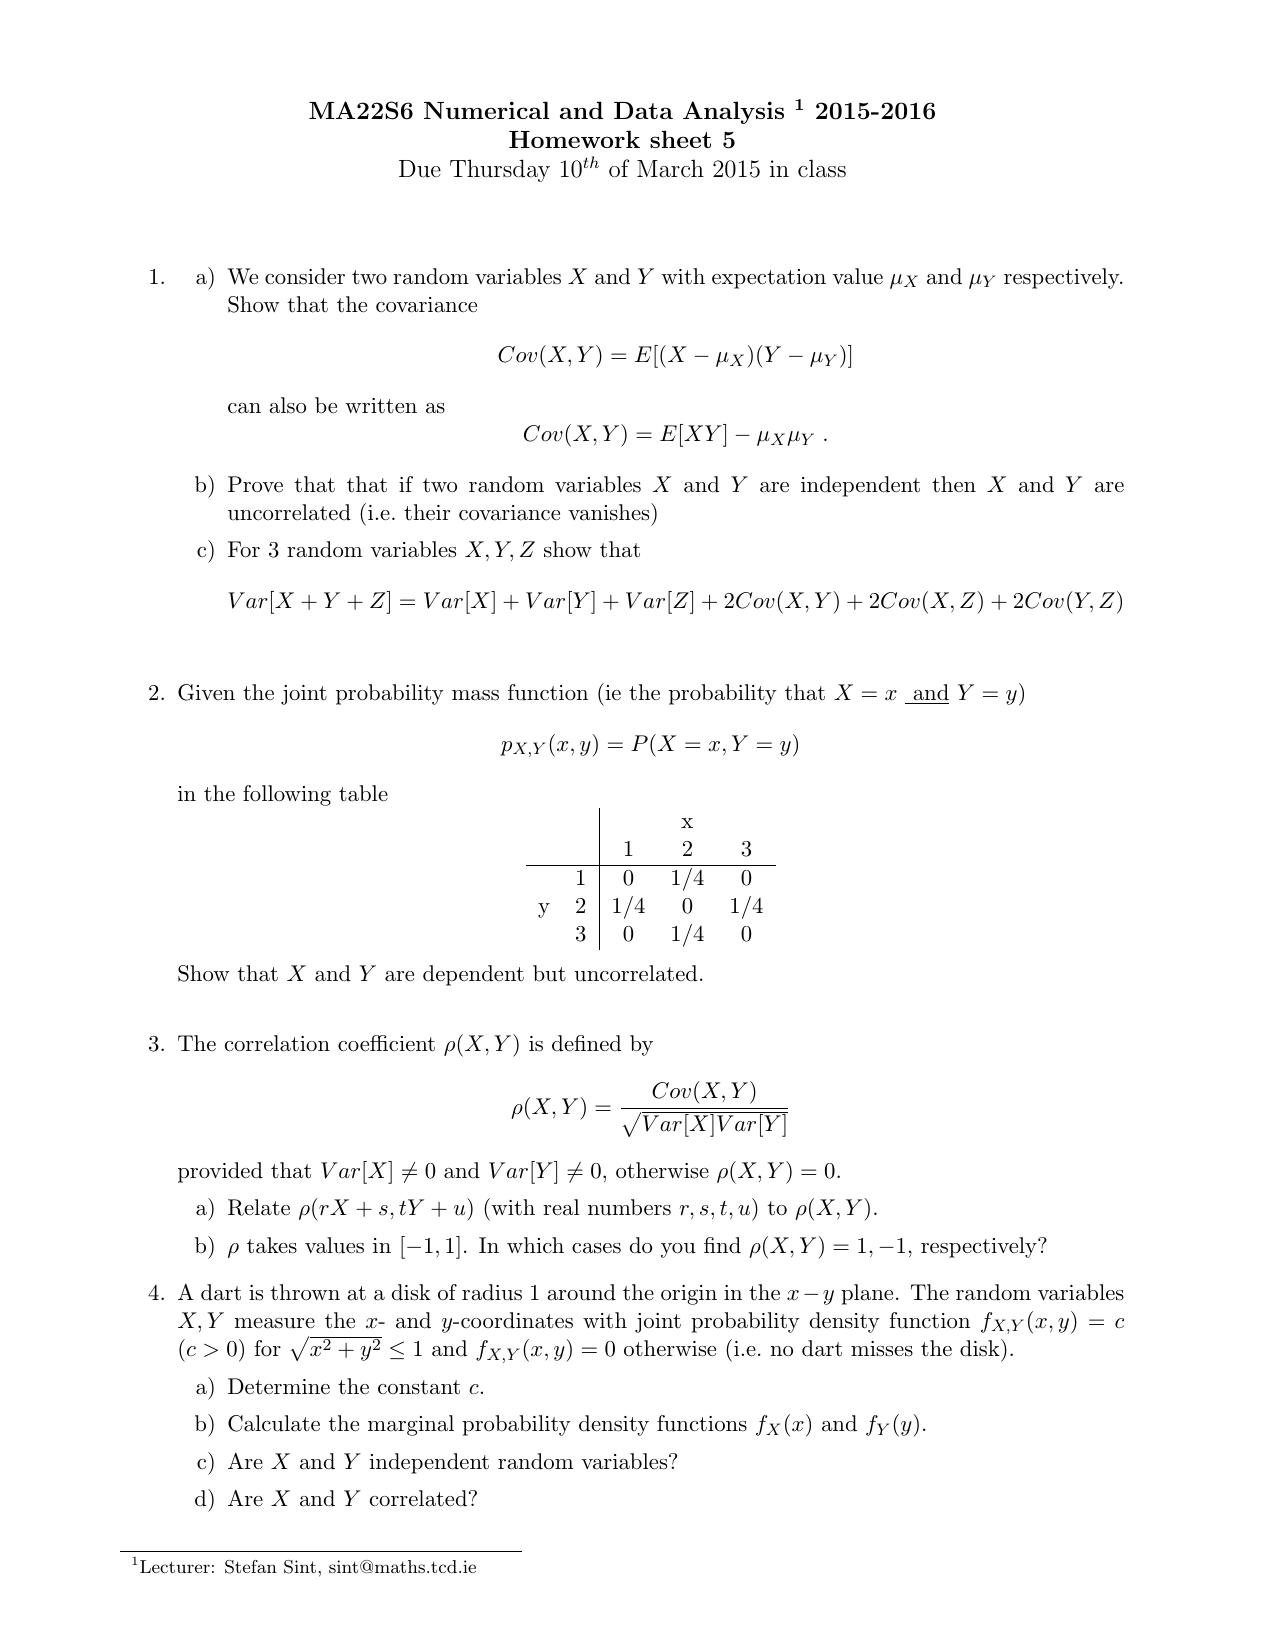 Ma22s6 Numerical And Data Analysis 15 16 Homework Sheet 5 Due Thursday 10